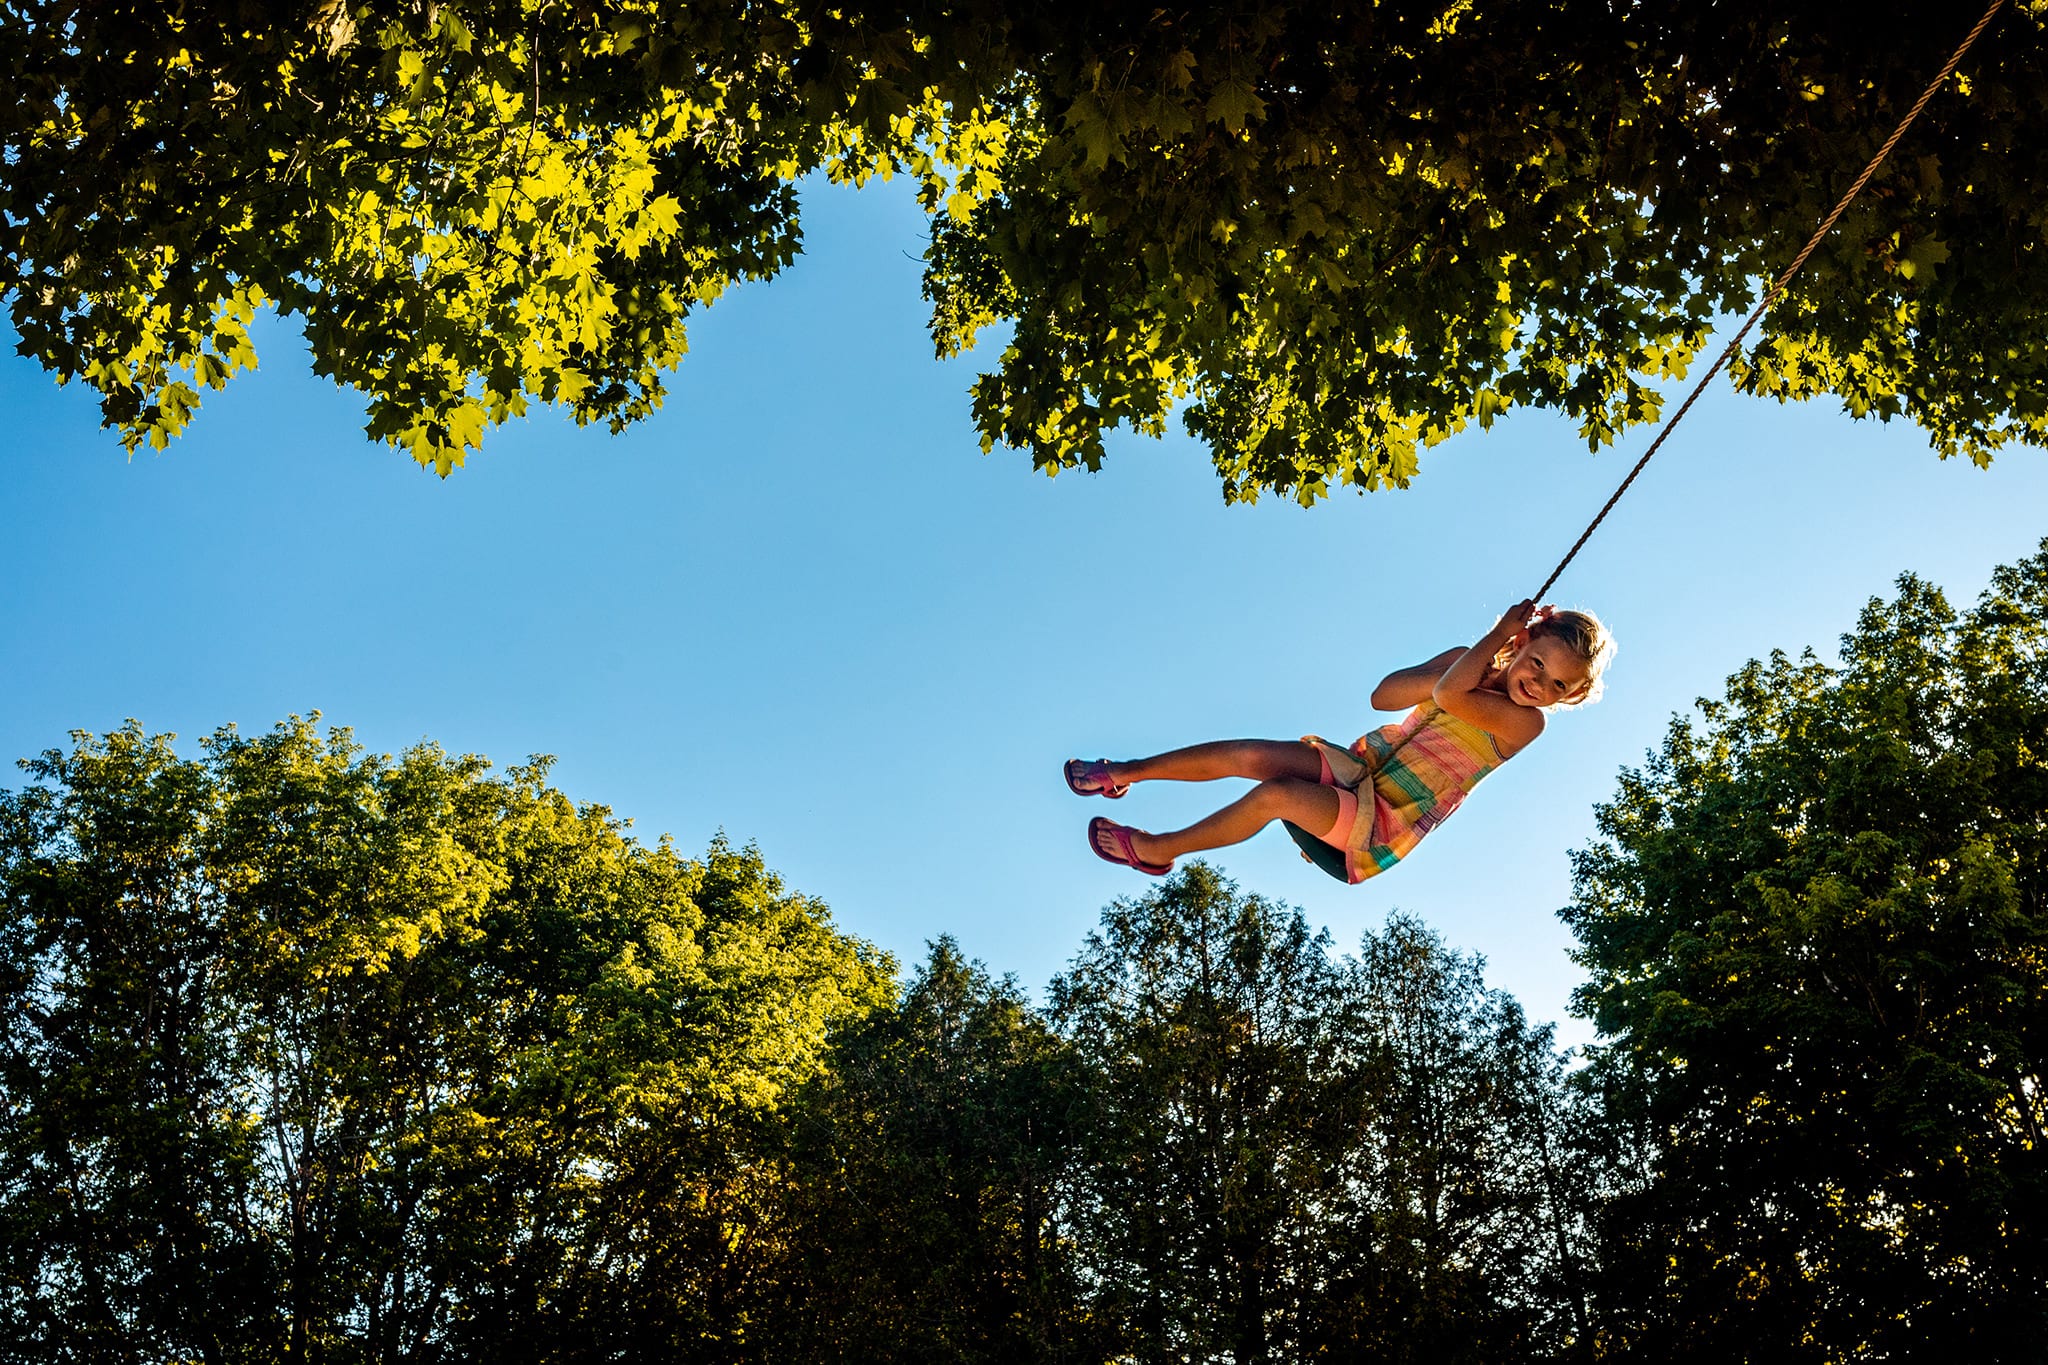 girl on tree swing swings into sky between tree branches